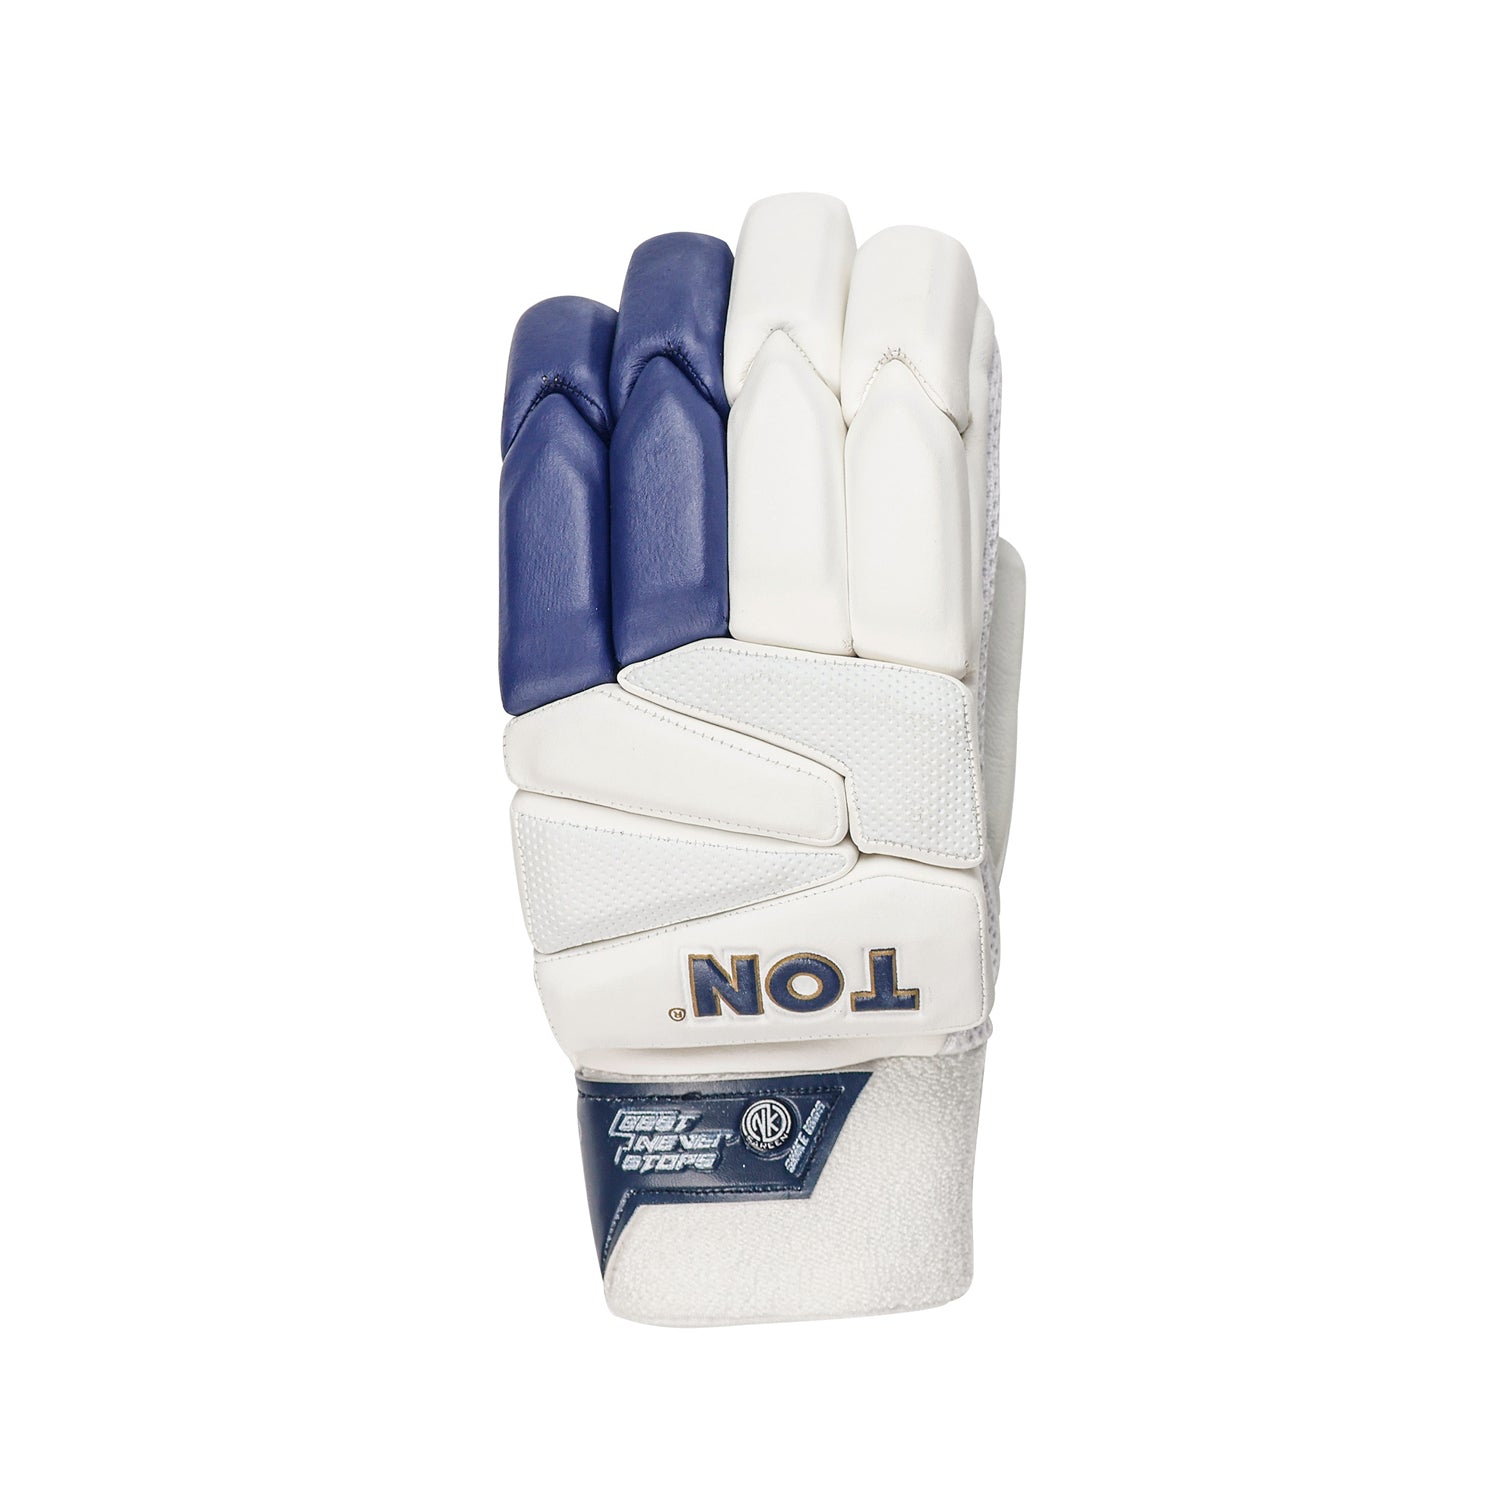 SS Ton Vertu New RH Cricket Batting Gloves - Adult - Best Price online Prokicksports.com